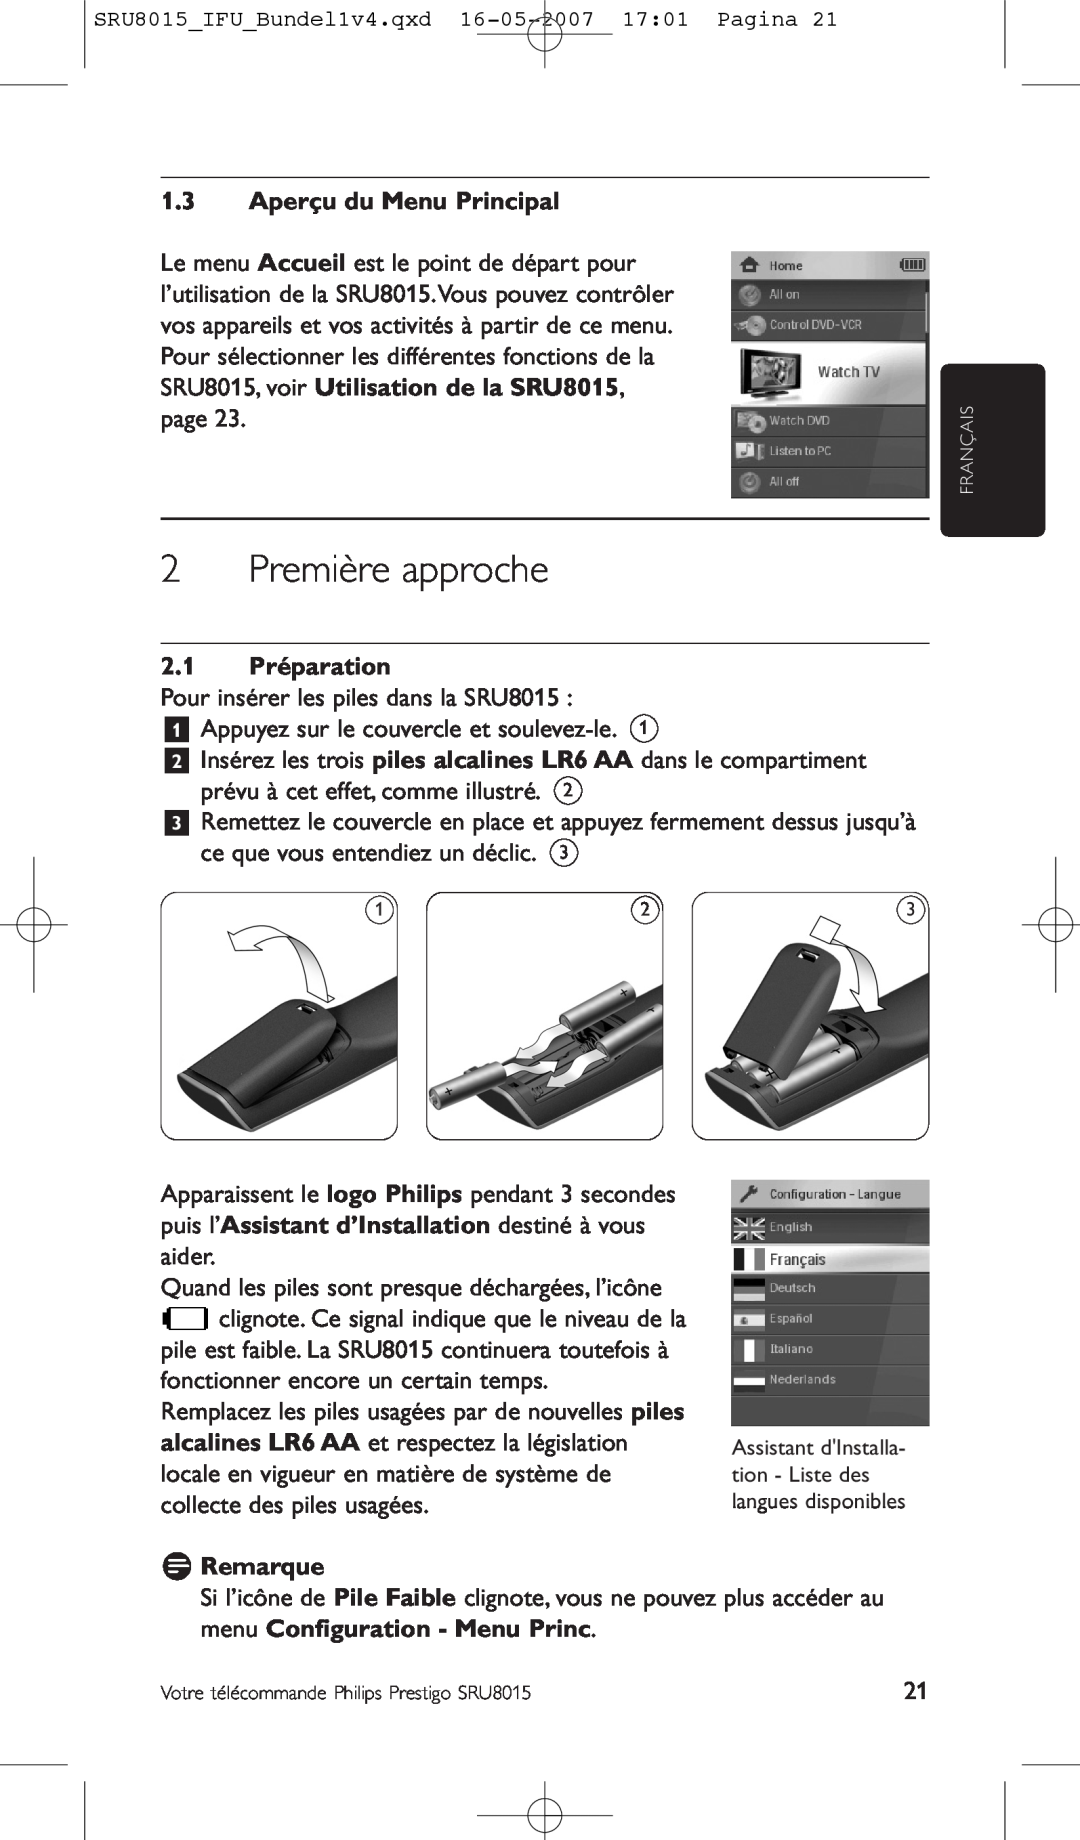 Philips SRU8015 manual Première approche, Aperçu du Menu Principal, 2.1 Préparation, D Remarque 